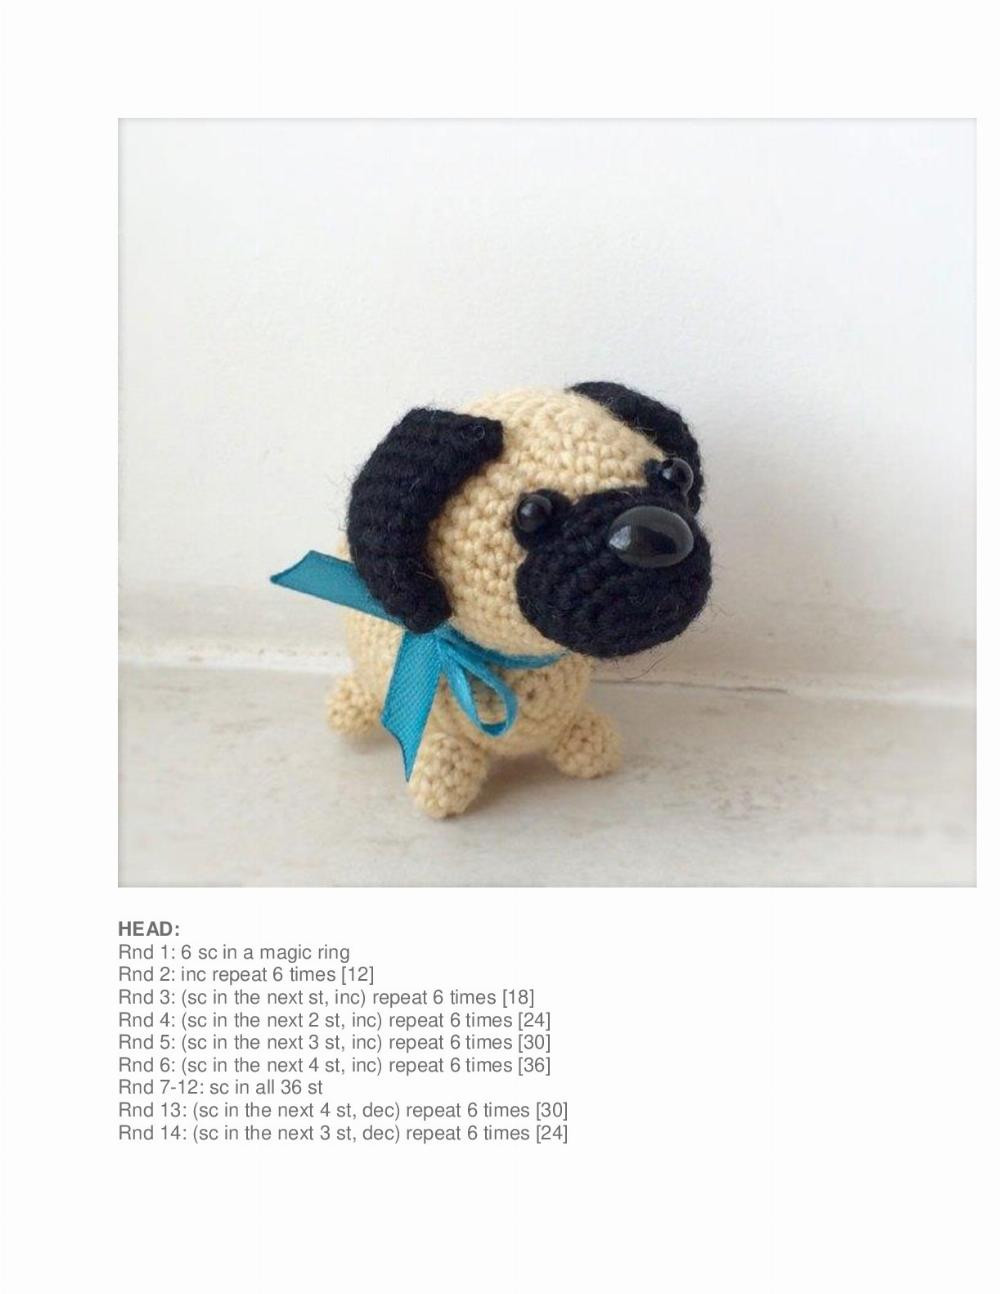 Little Pug Dog amigurumi pattern